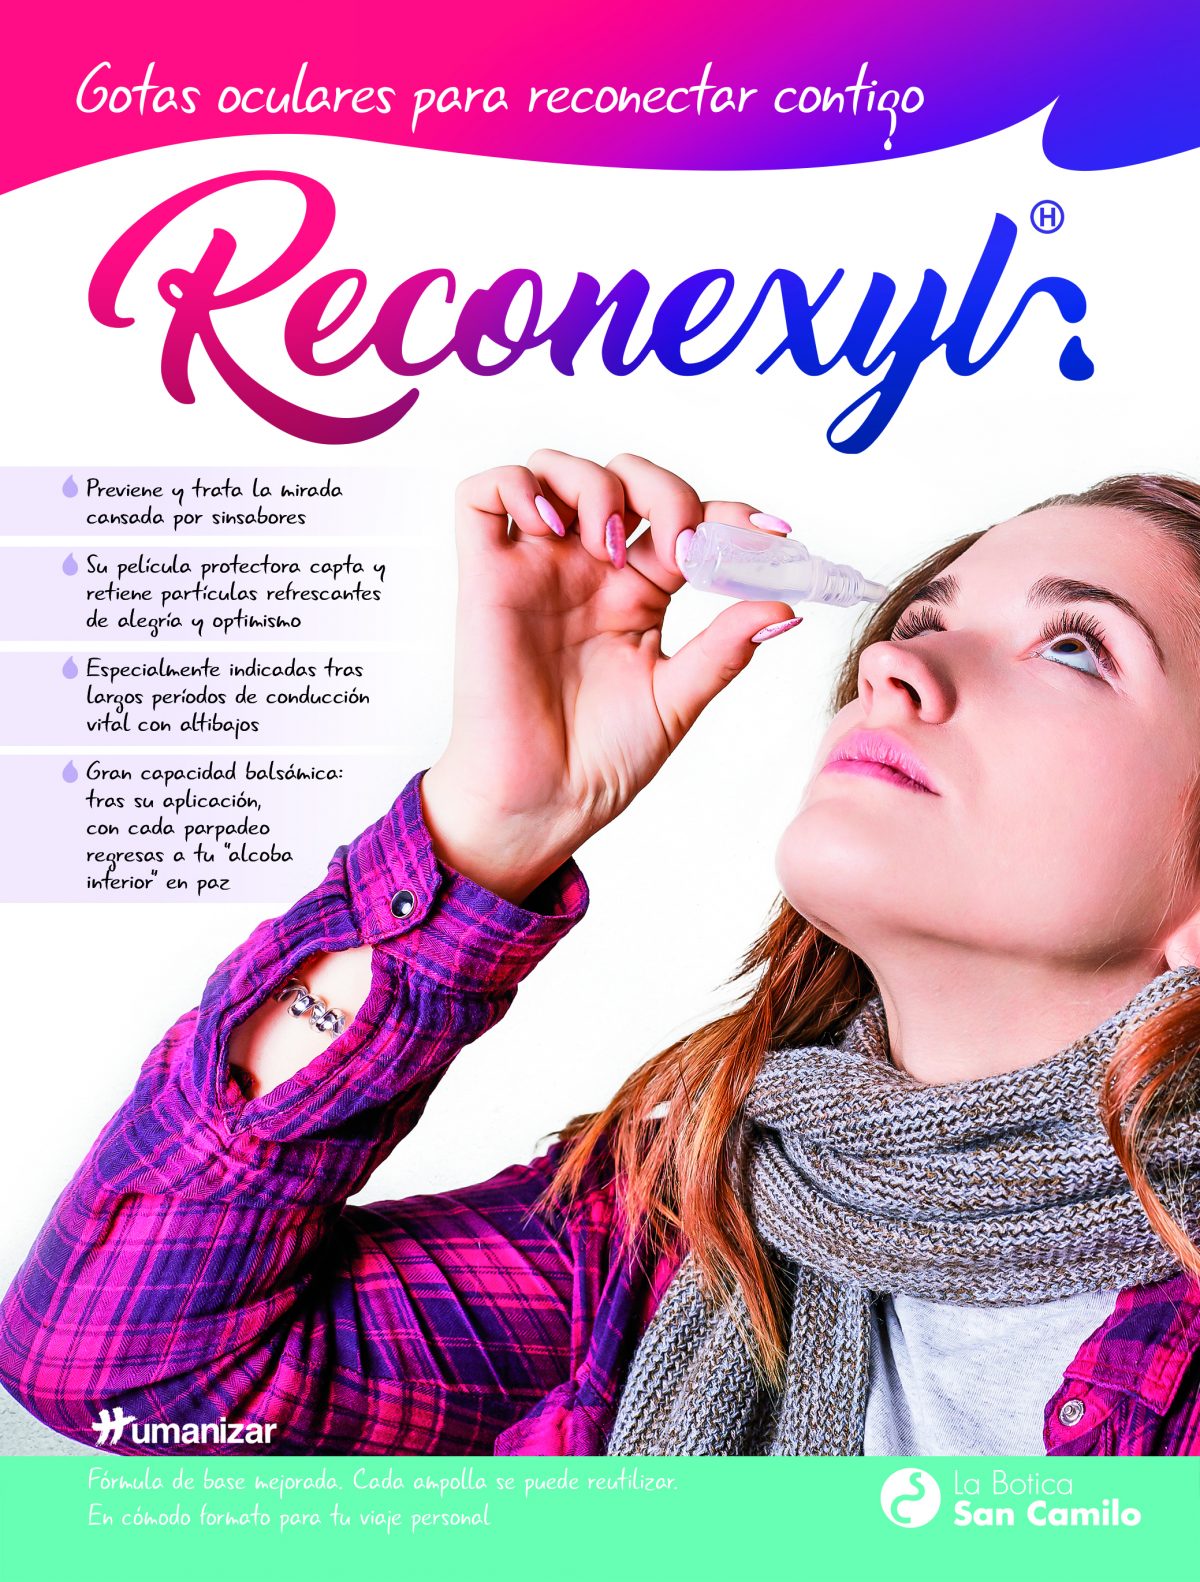 «Reconexyl» Gotas oculares para conectar contigo